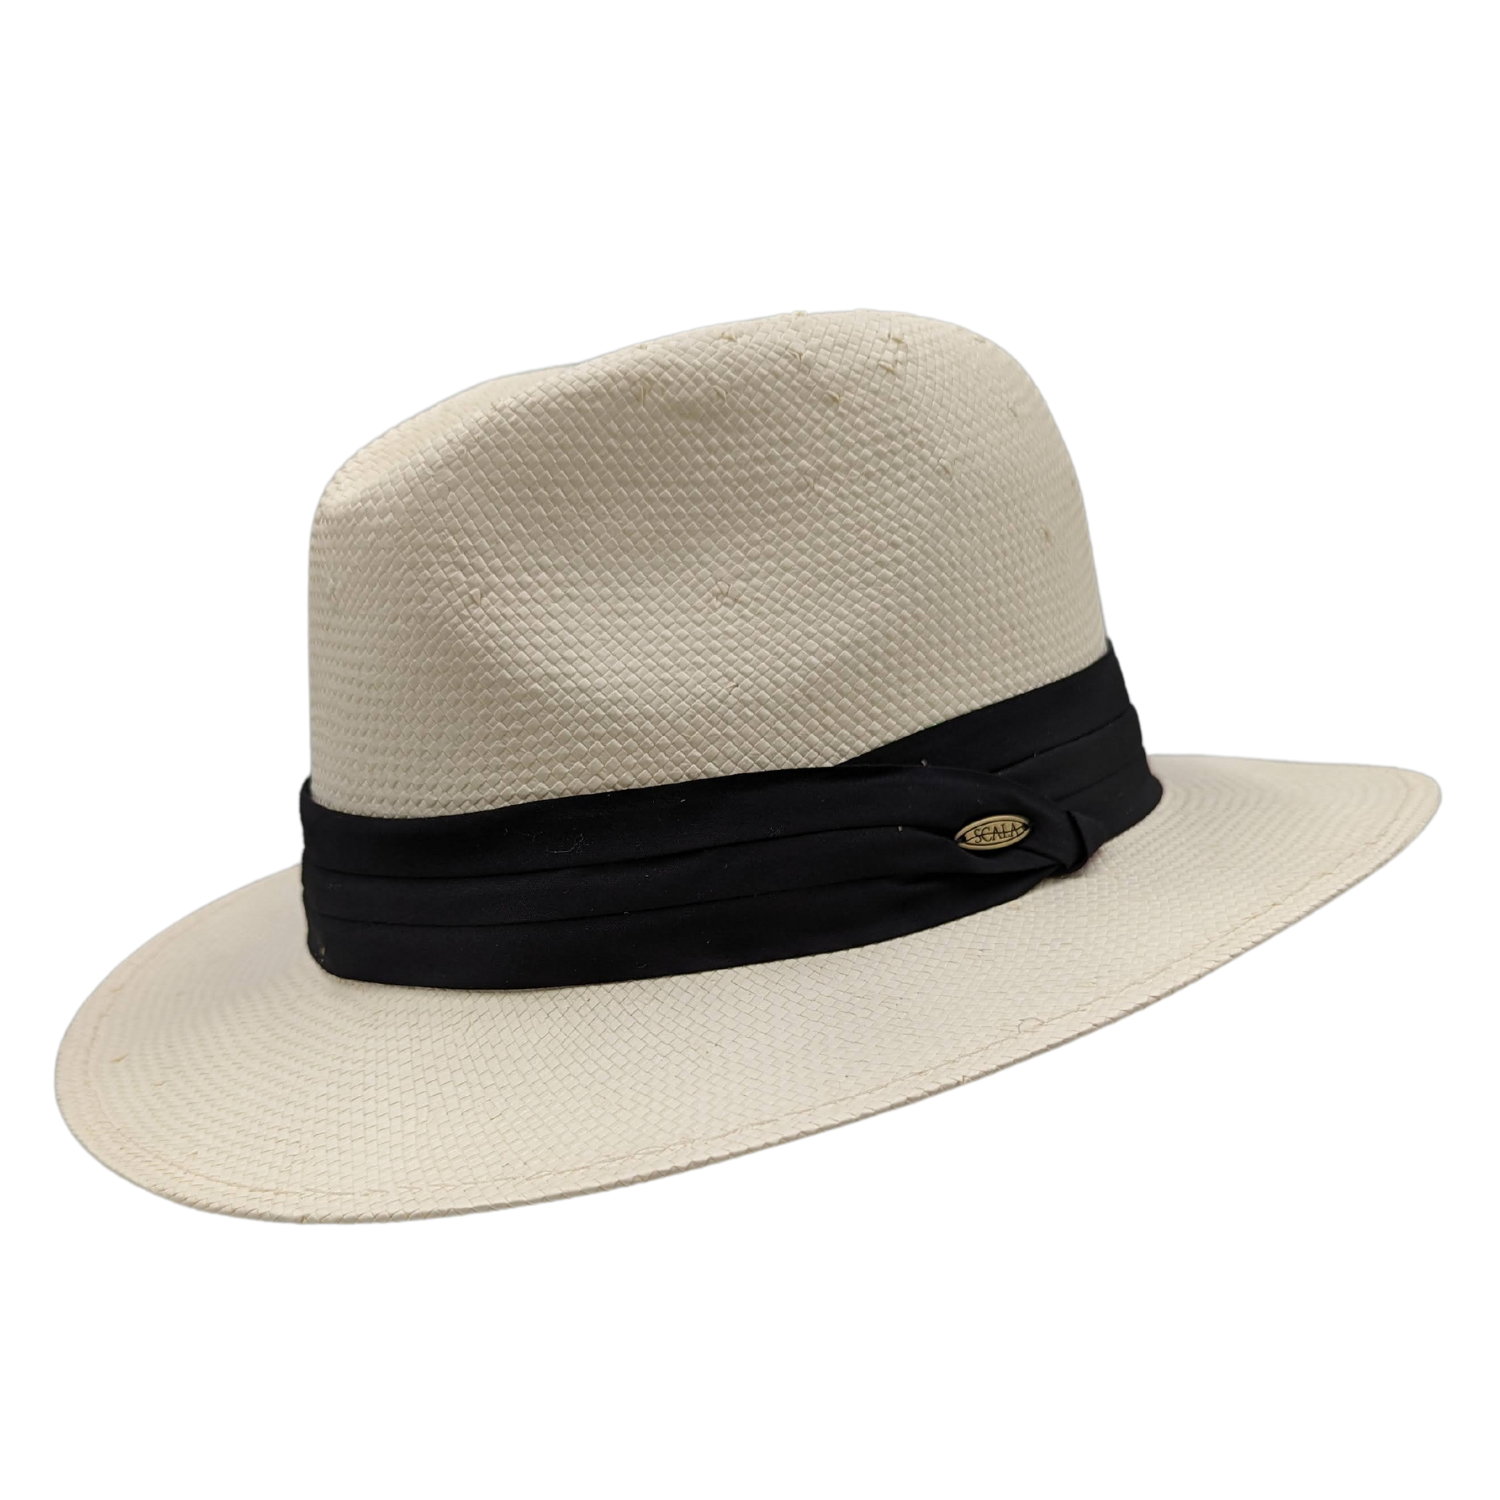 Khaki Toyo Safari Hat, Sun Protection Hats for Men